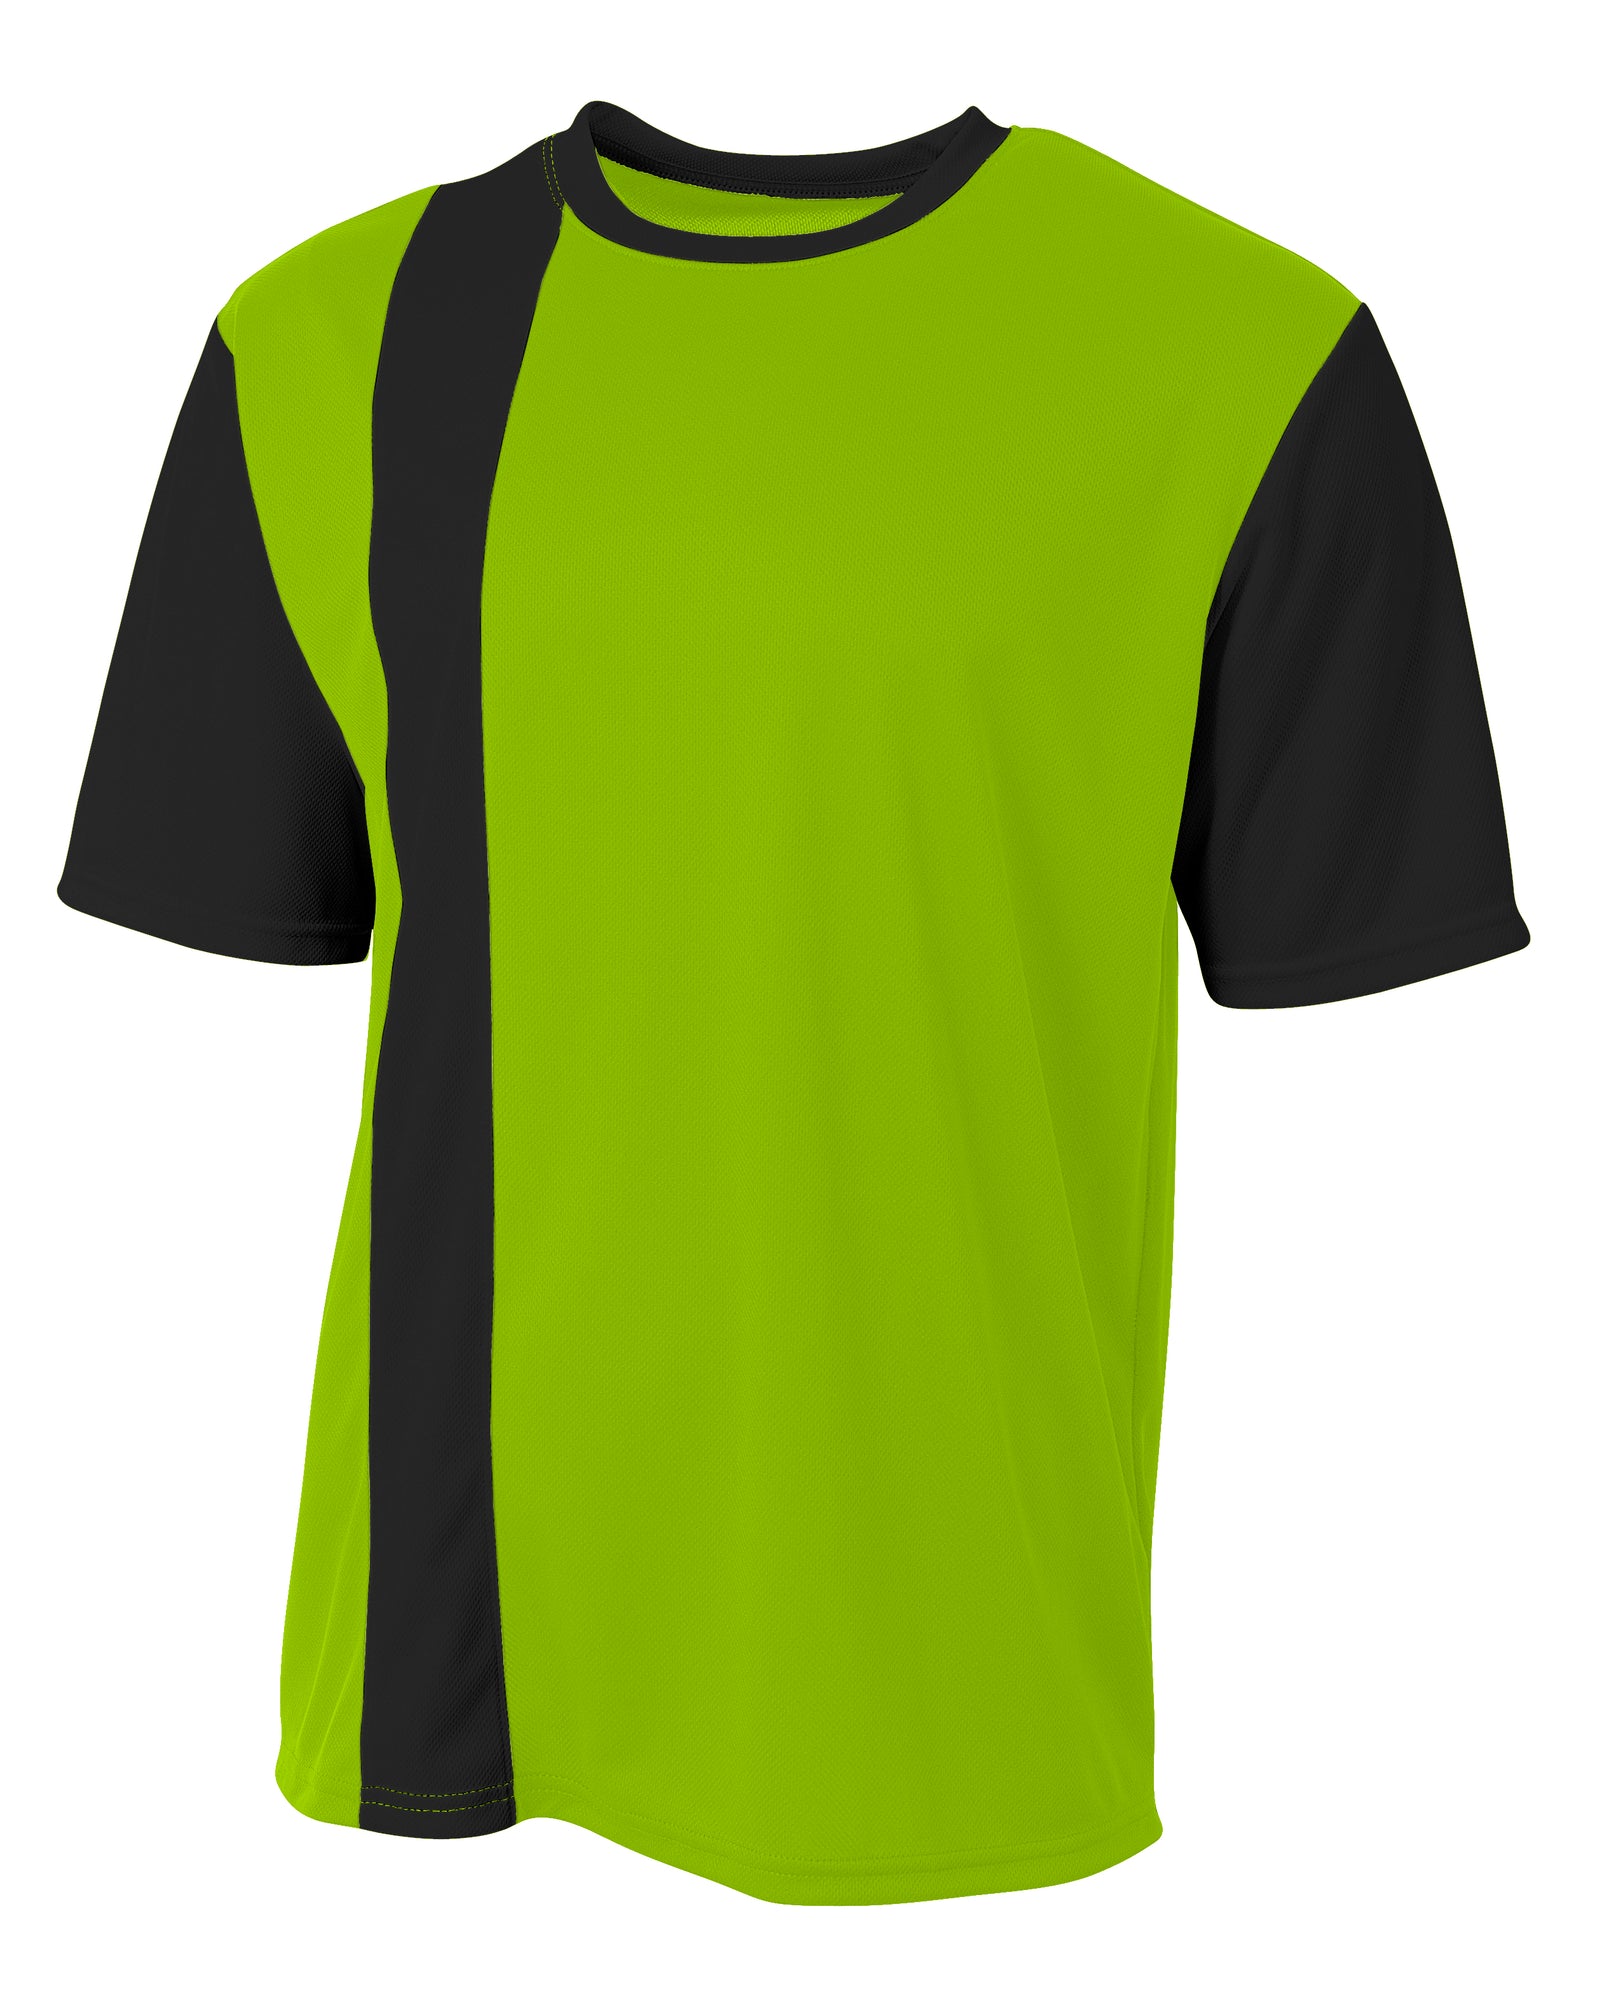 Lime Black A4 A4 Legend Soccer Jersey